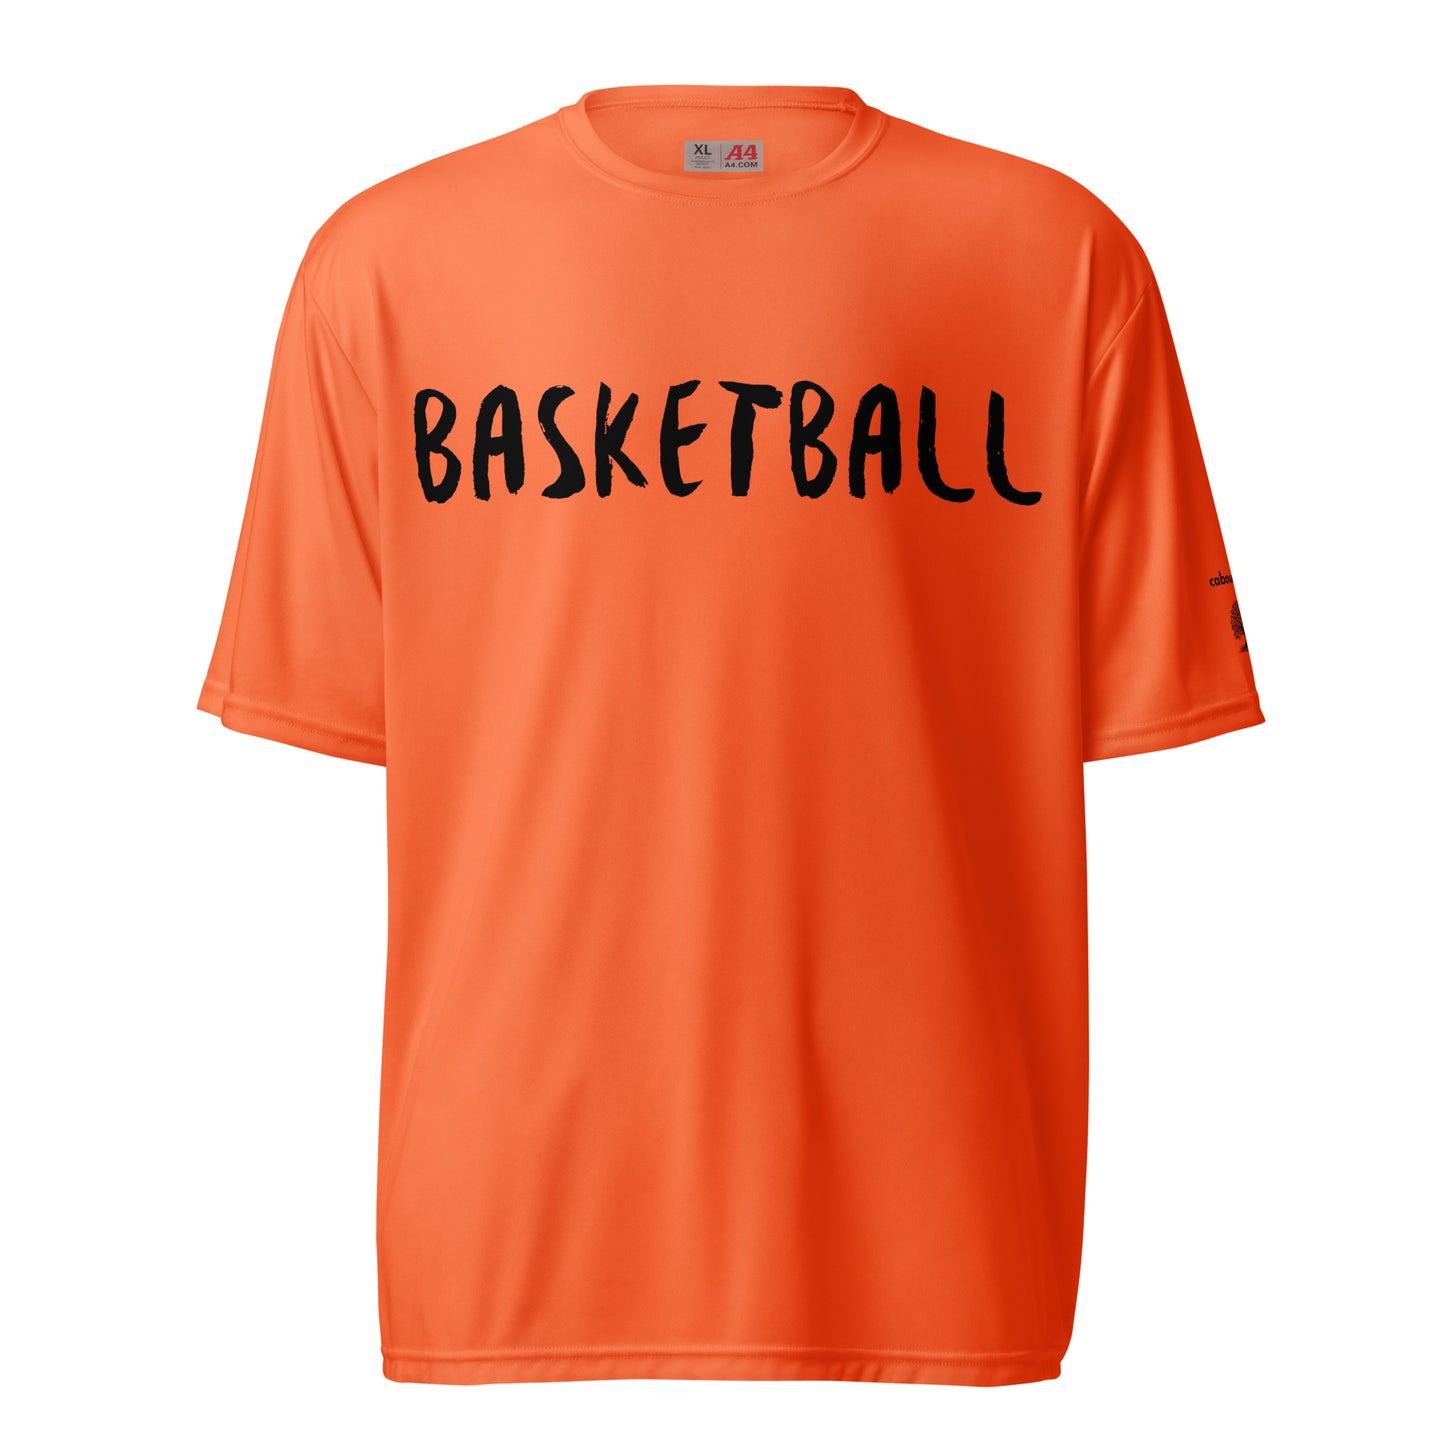 Unisex performance crew neck t-shirt - Basketball  (Black)